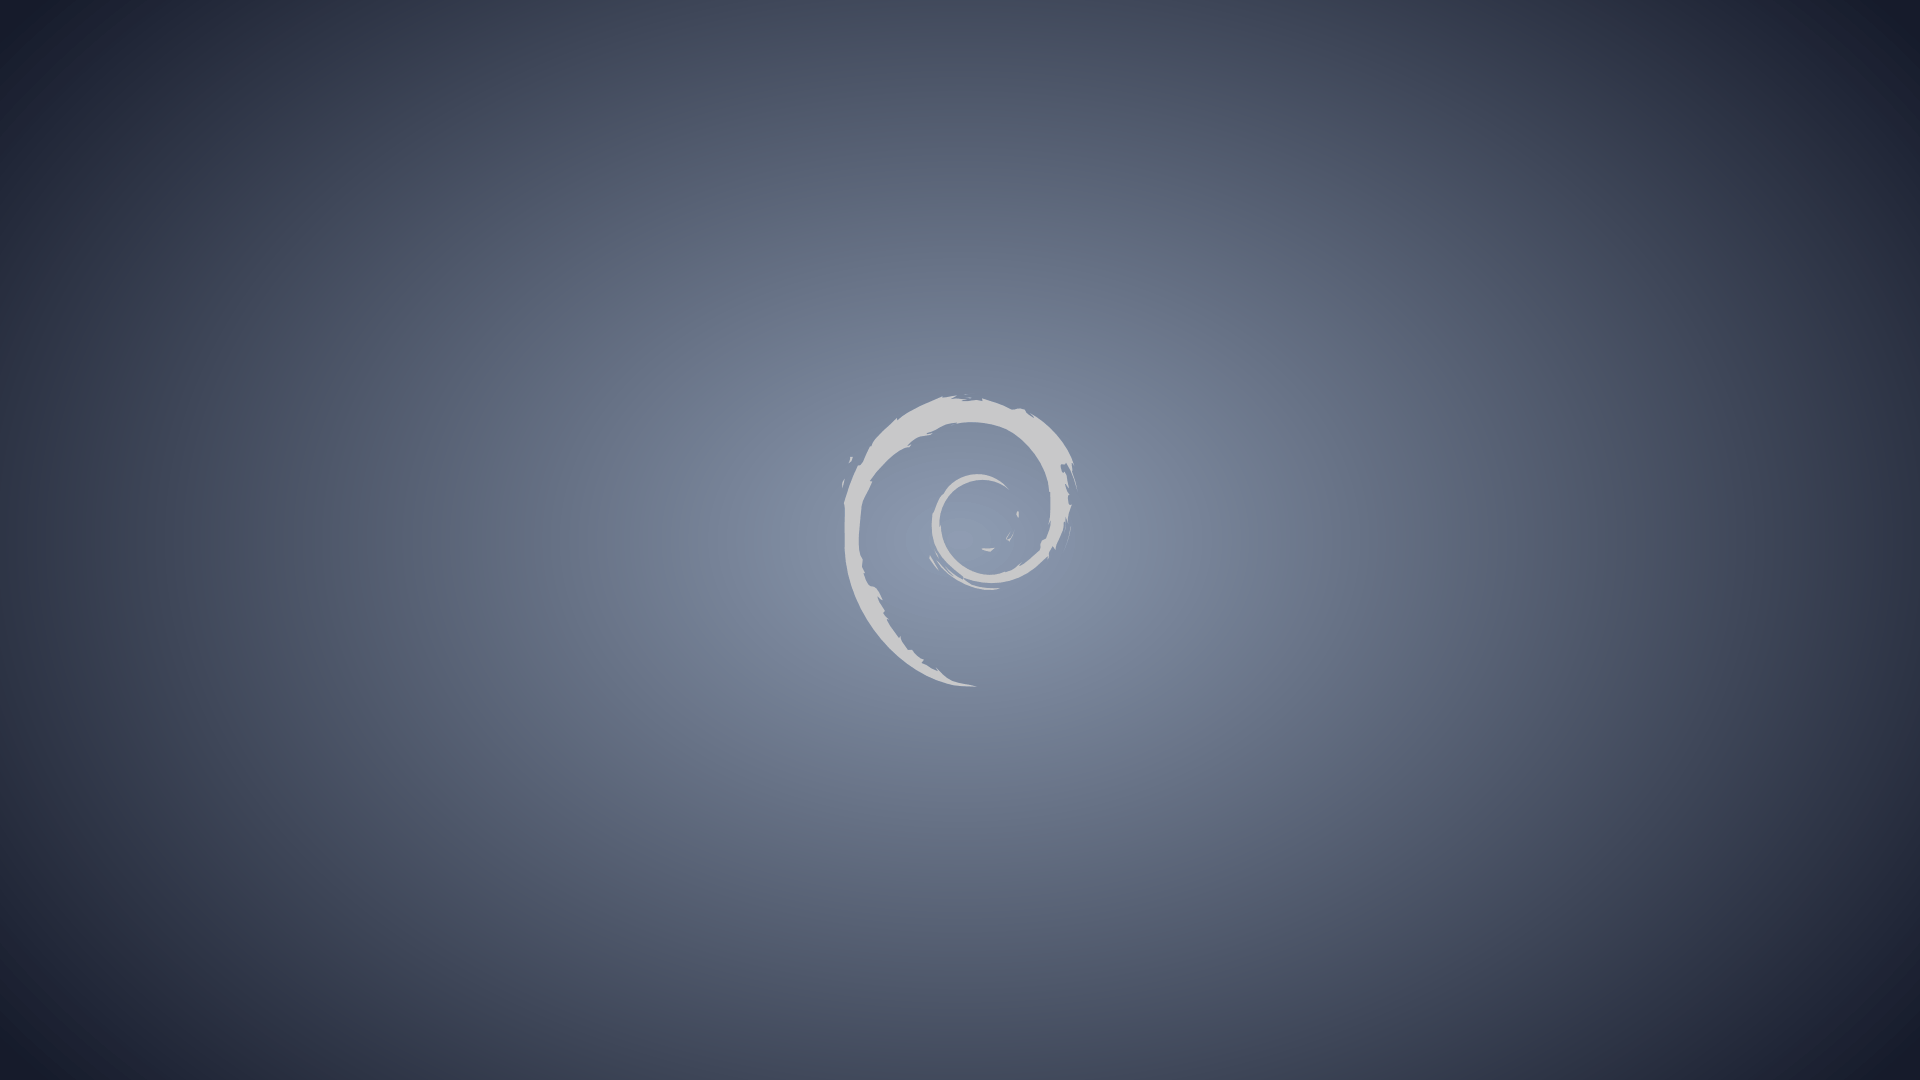 Debian Wallpaper For Your Desktop